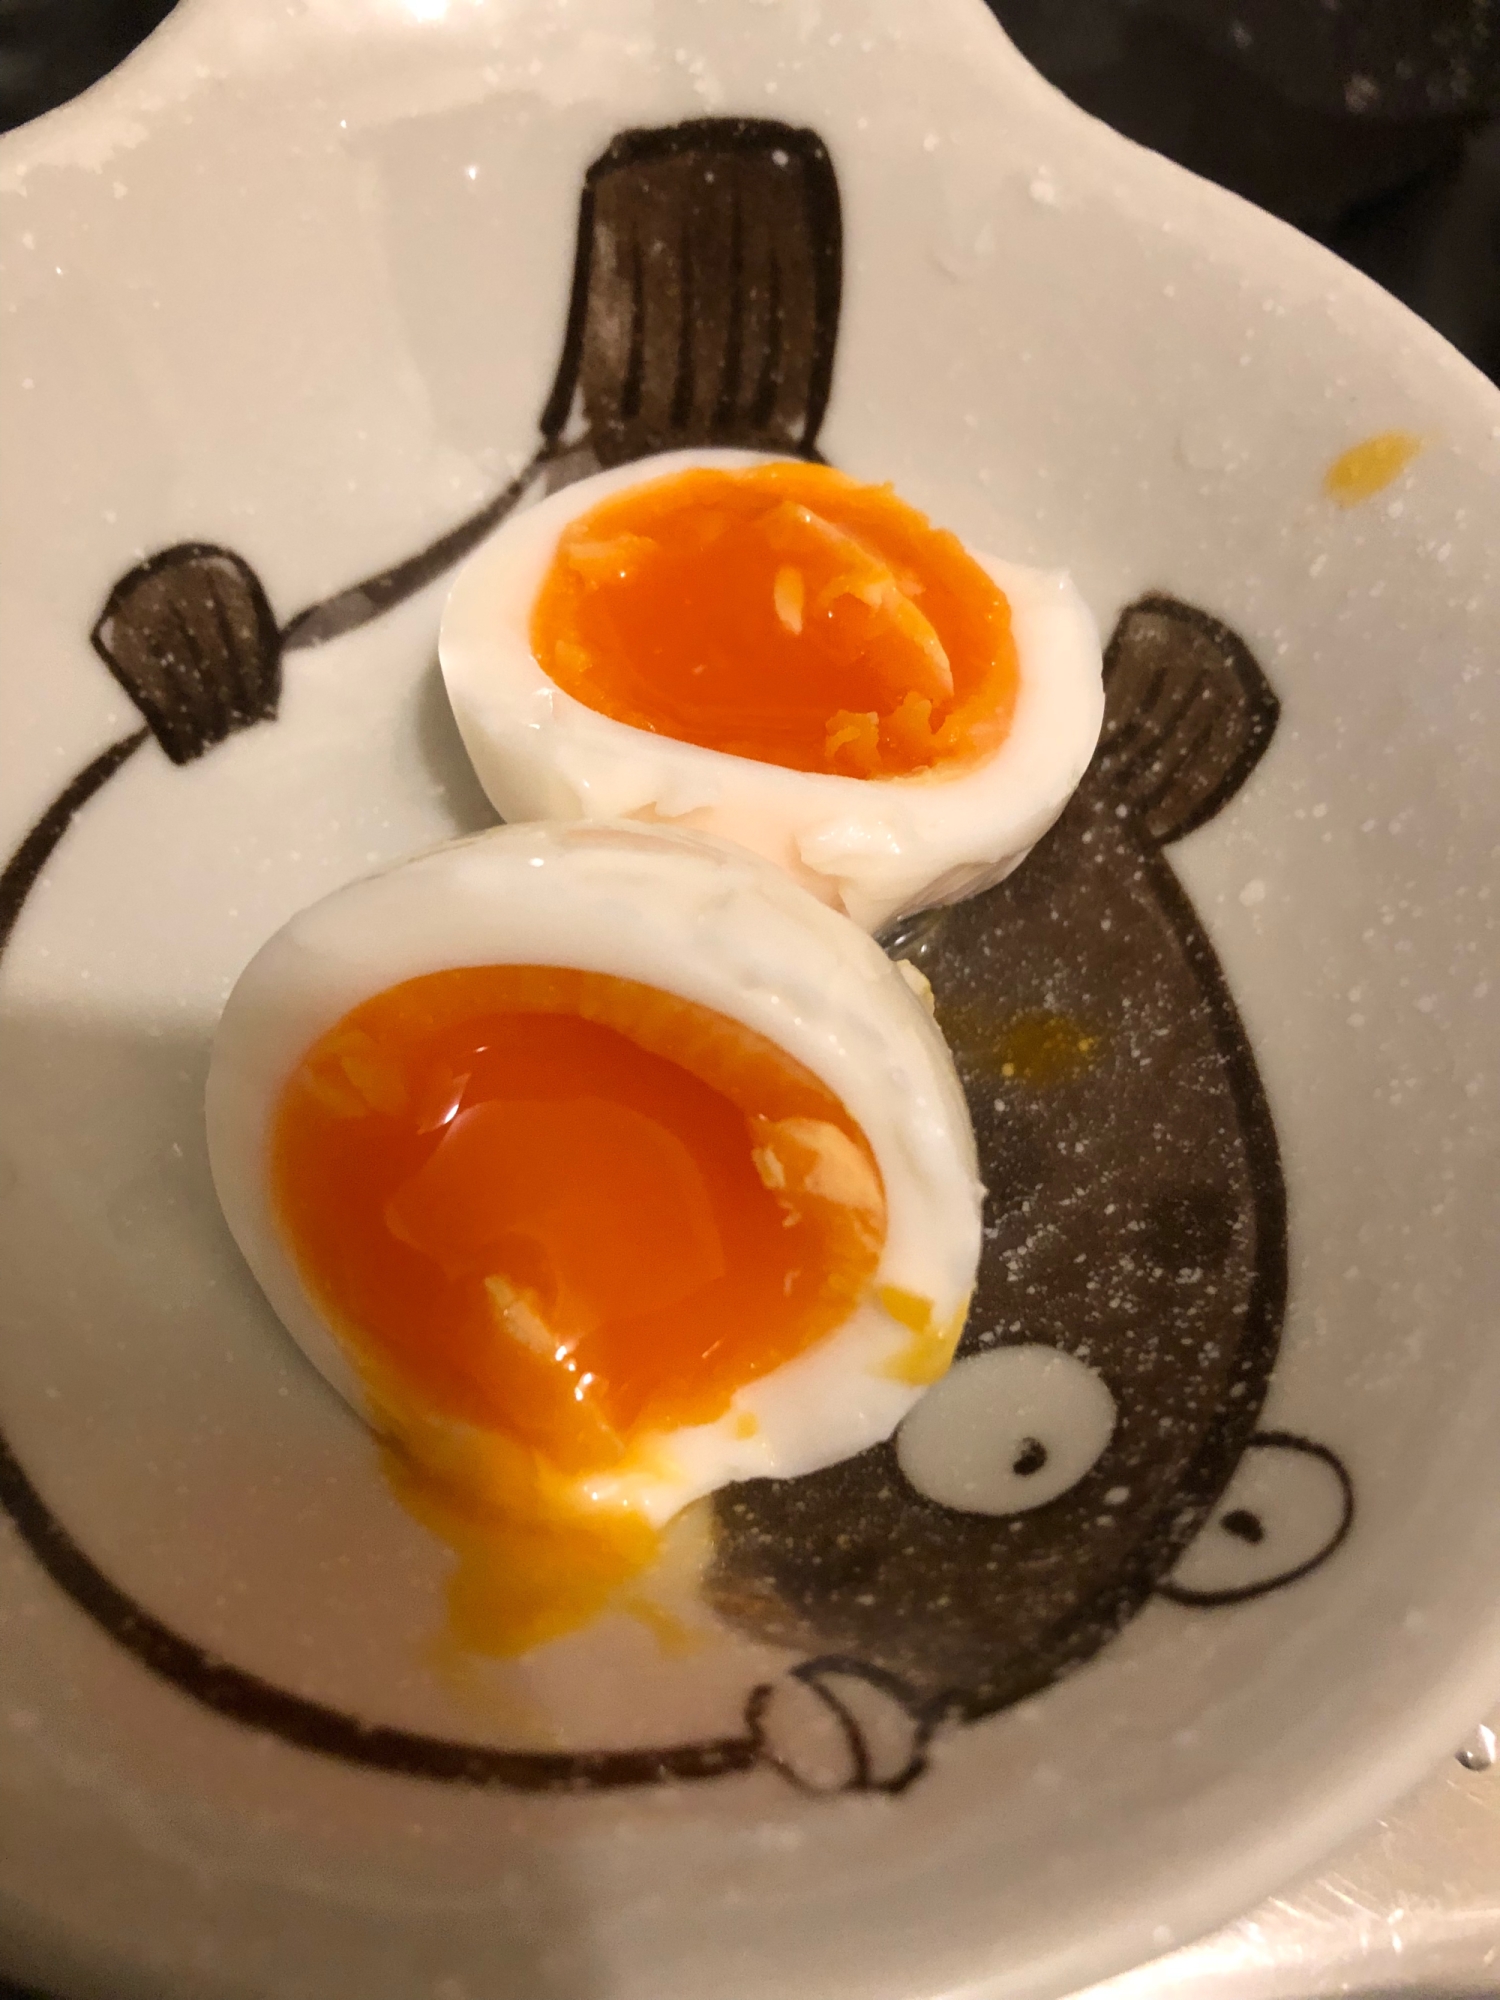 Mサイズ卵で完璧な半熟卵 レシピ 作り方 By マツバリ 楽天レシピ